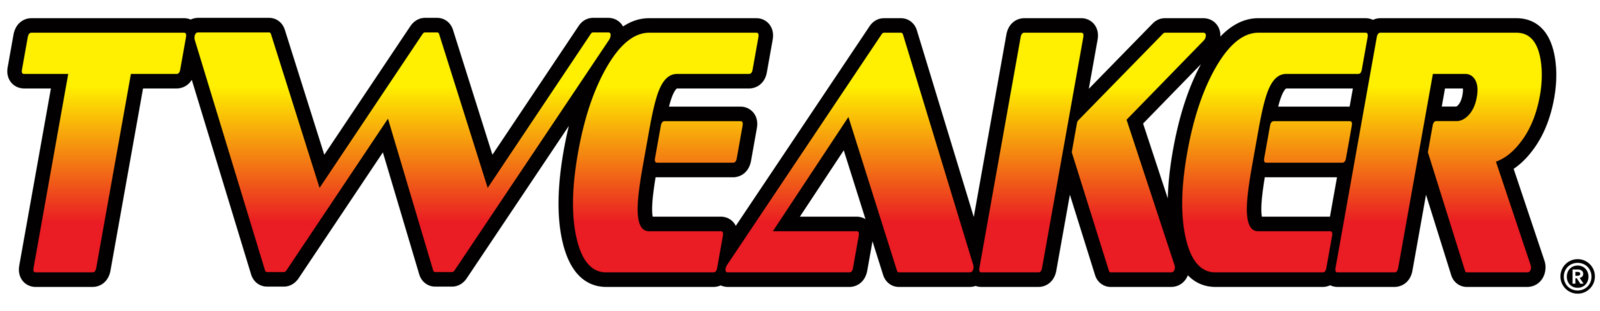 Tweaker-logo